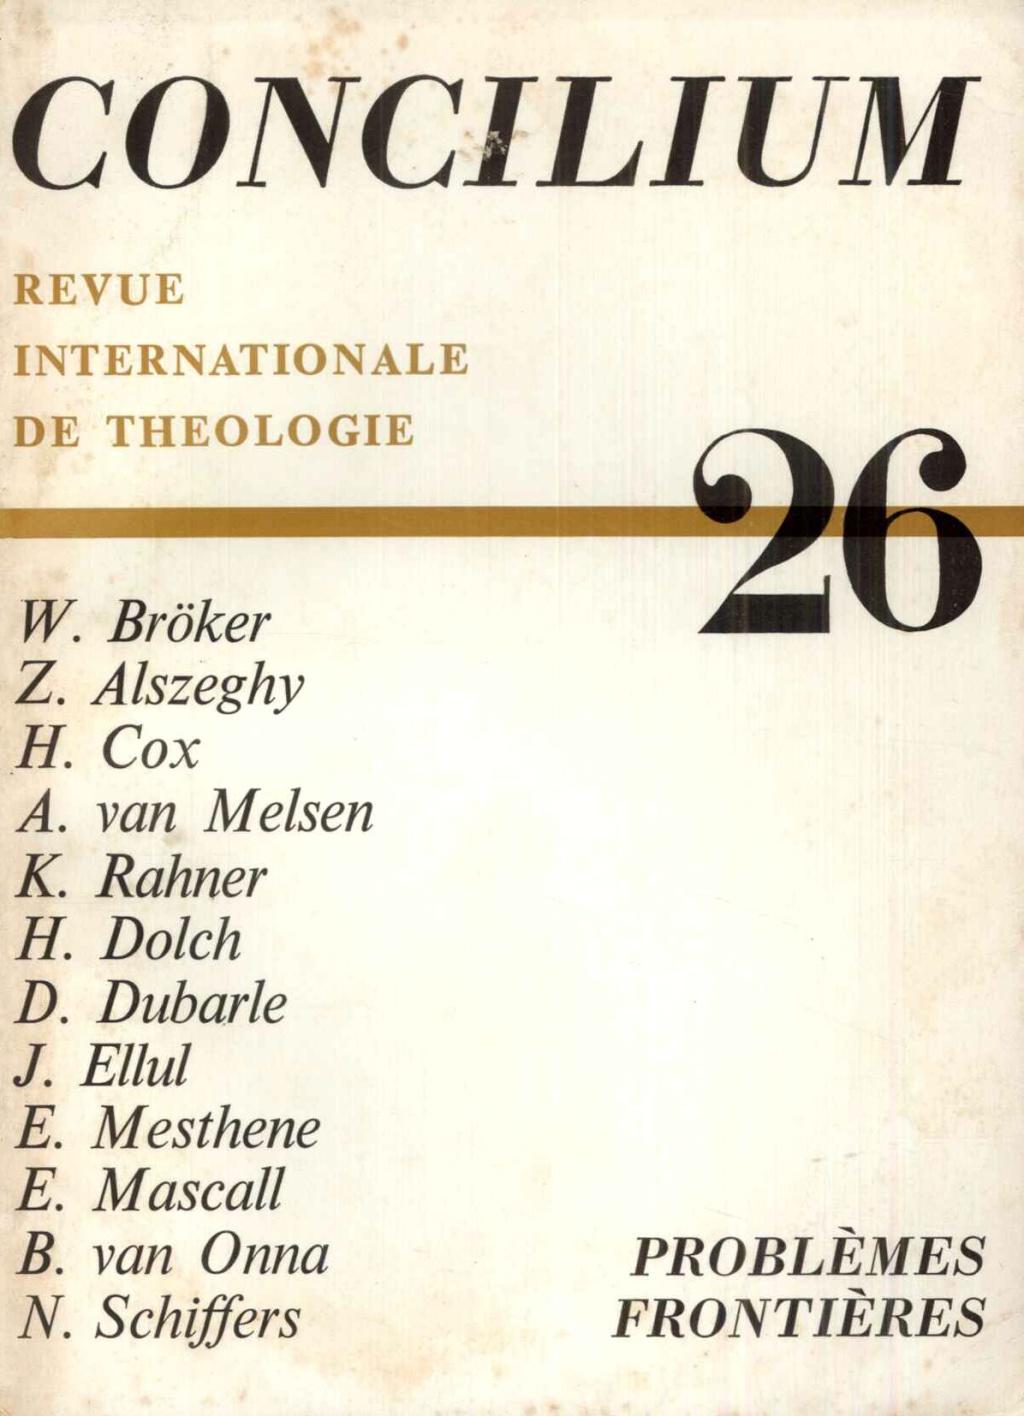 Concilium 26 revue internationale de theologie